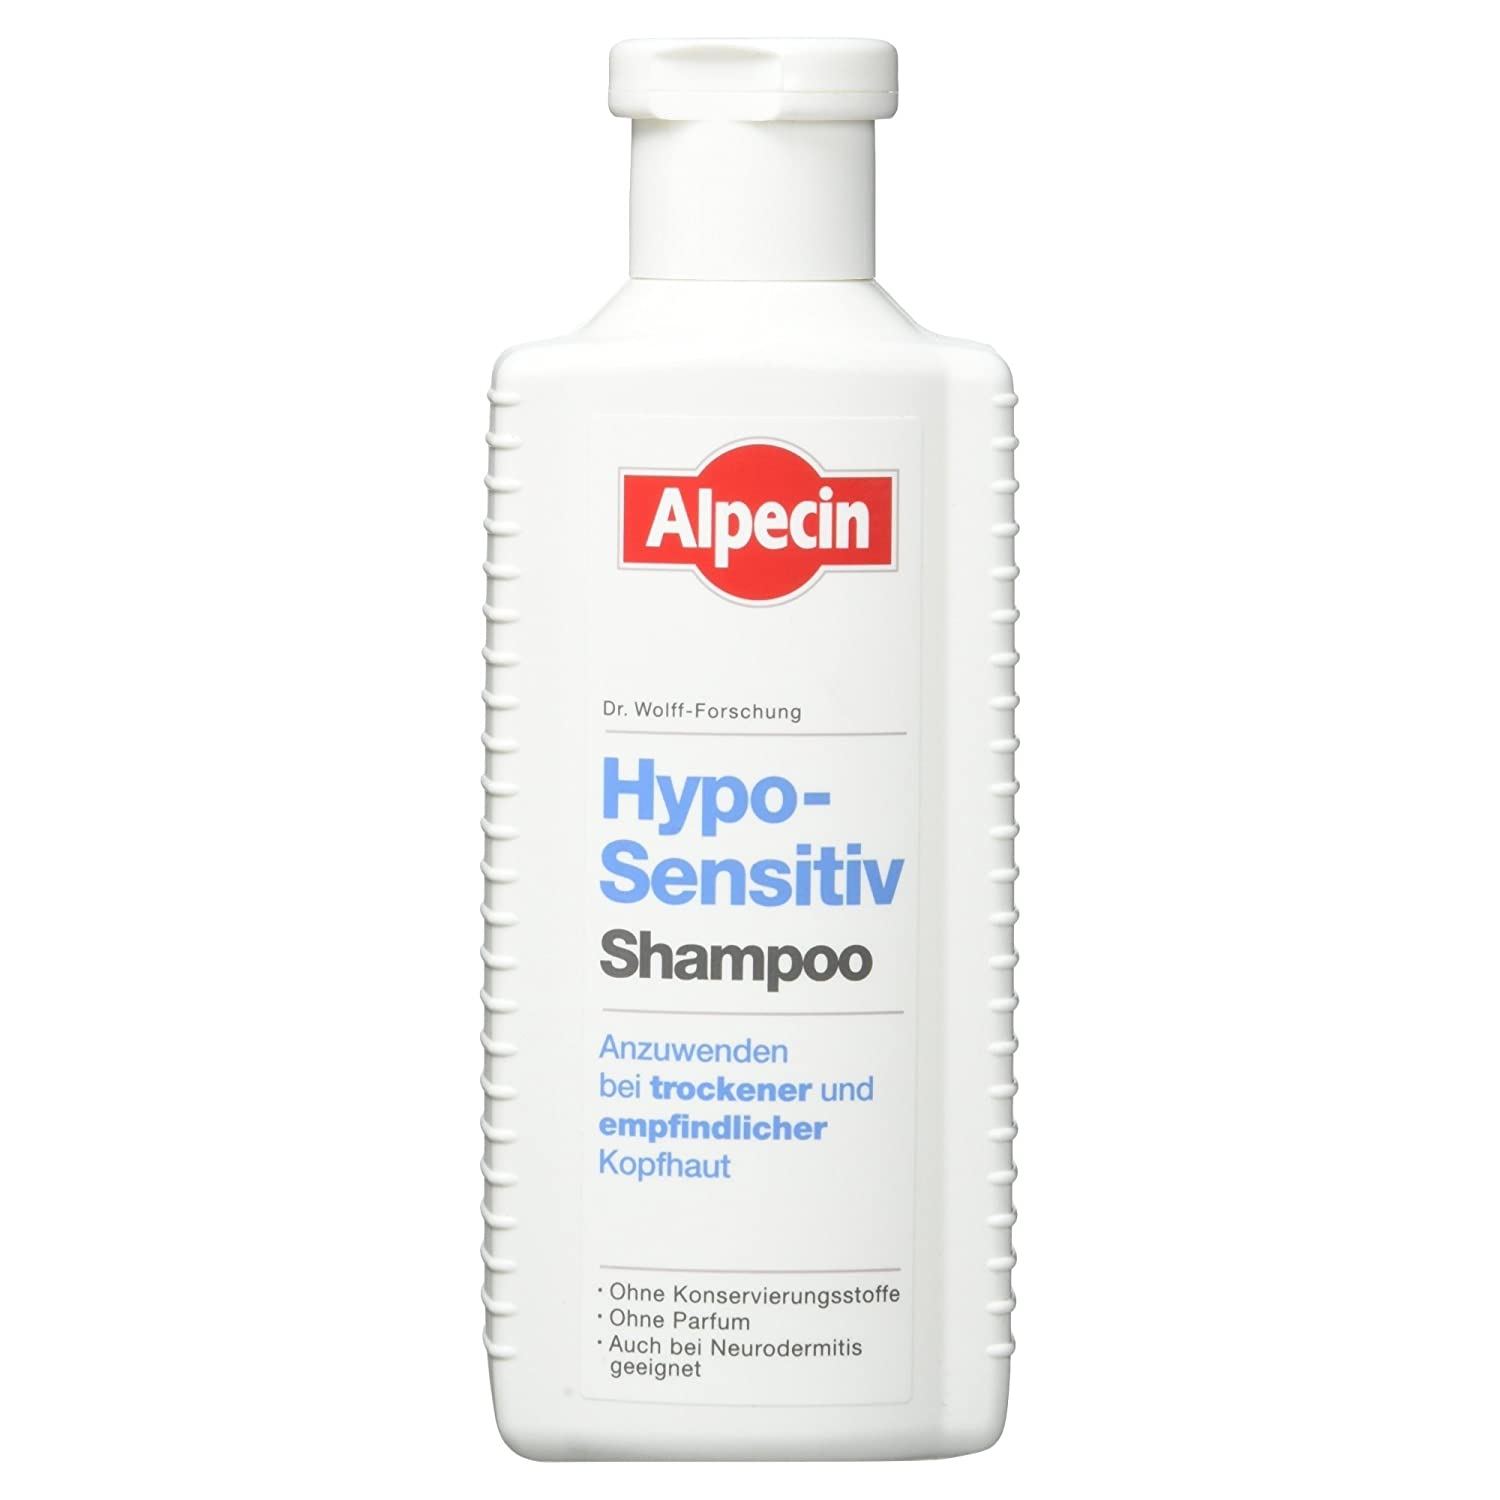 Alpecin Hypo-Sensitive Shampoo for Dry and Sensitive Scalp 250 ml, 